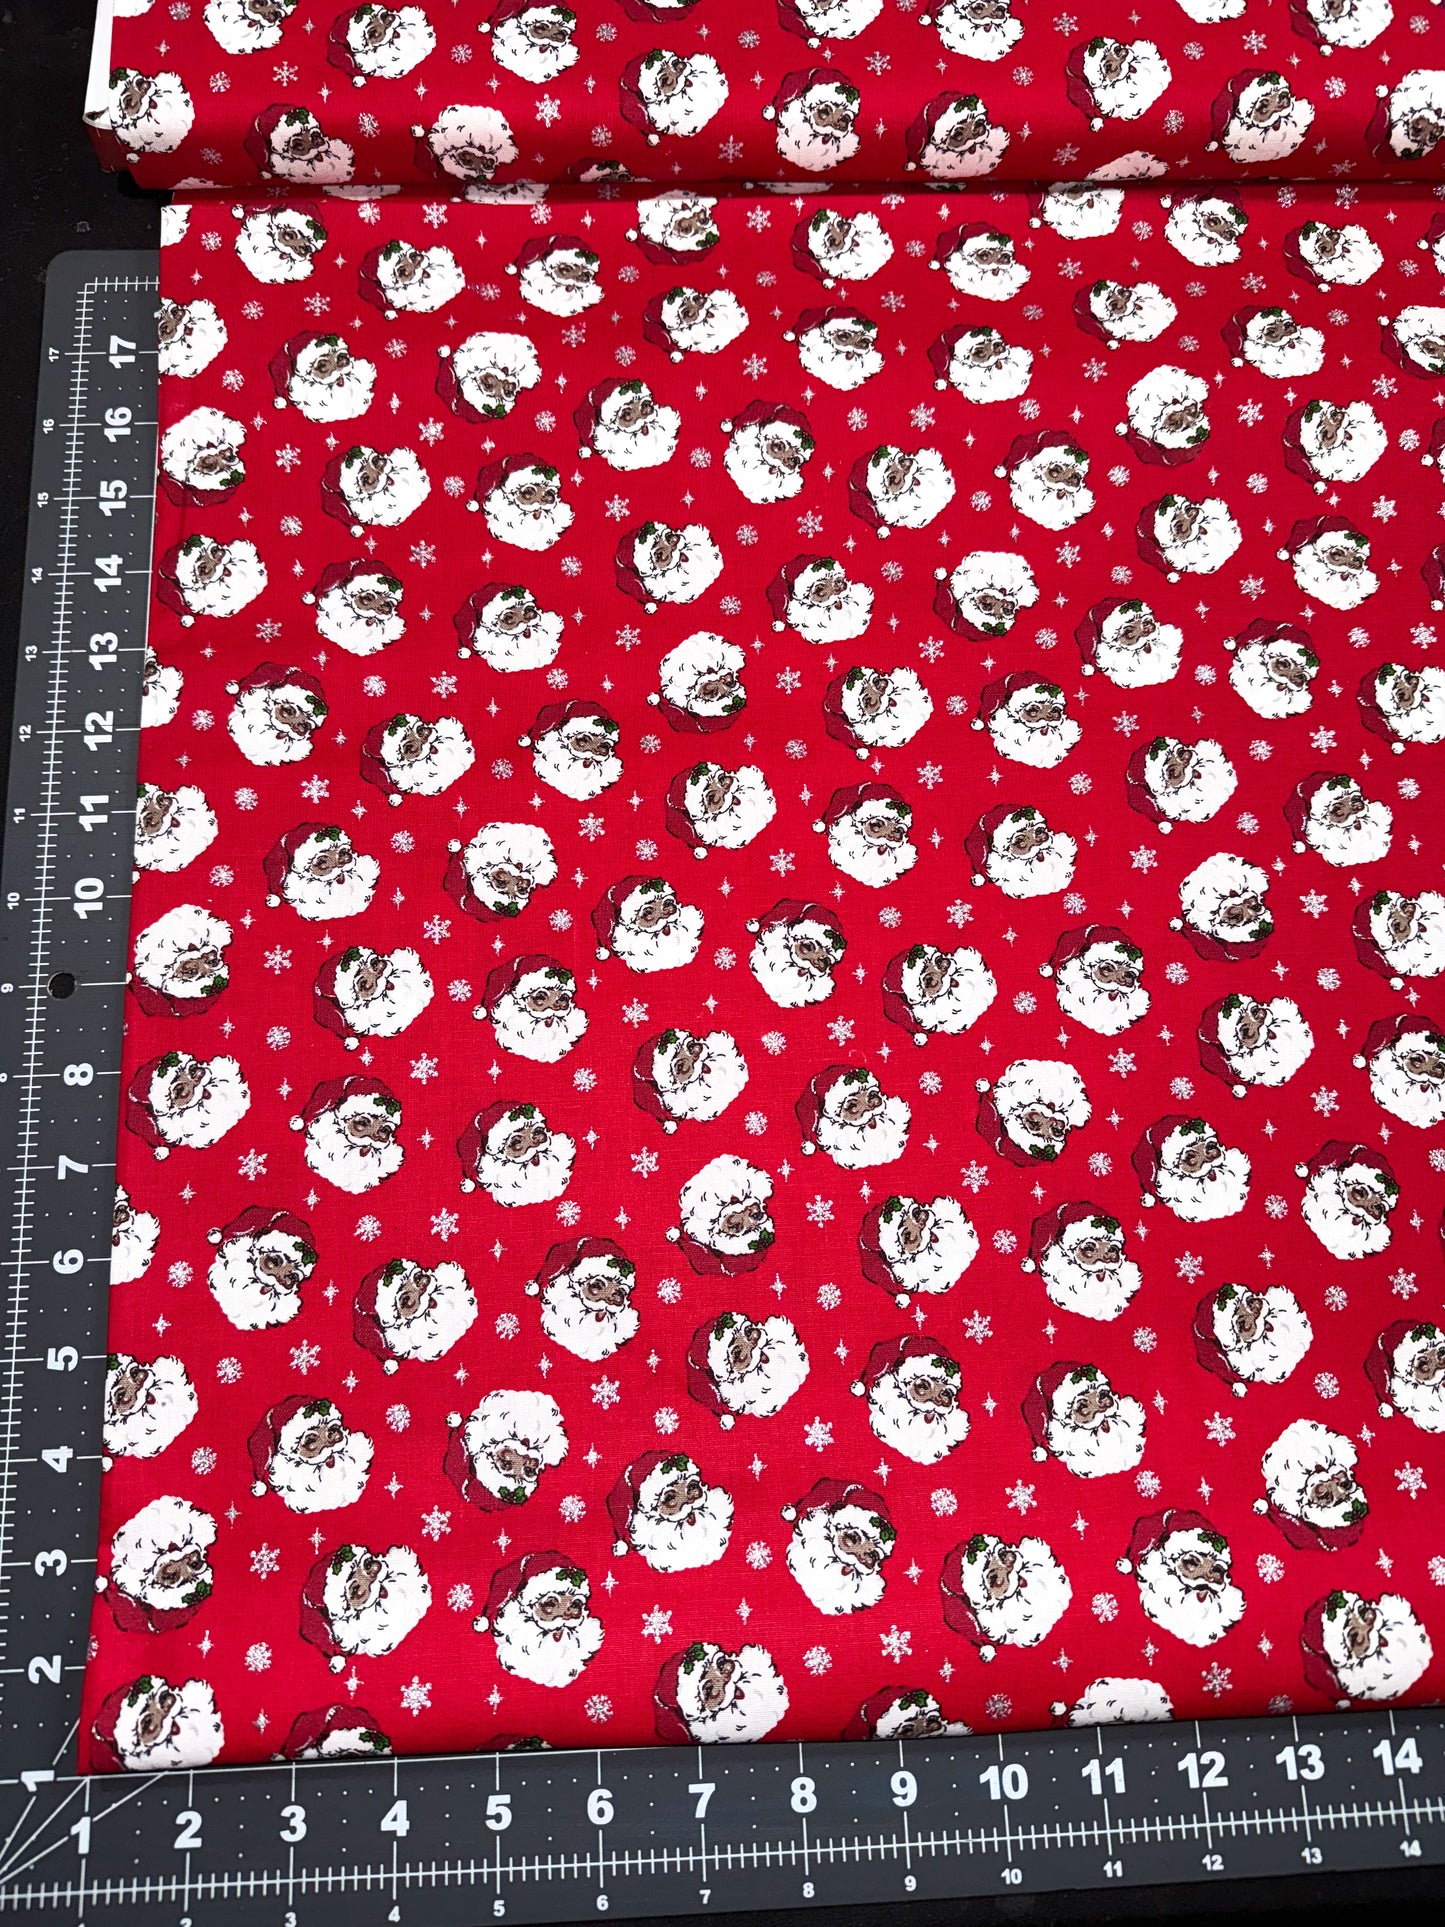 Snowflakes and Santa Claus fabric vintage Christmas cotton fabric